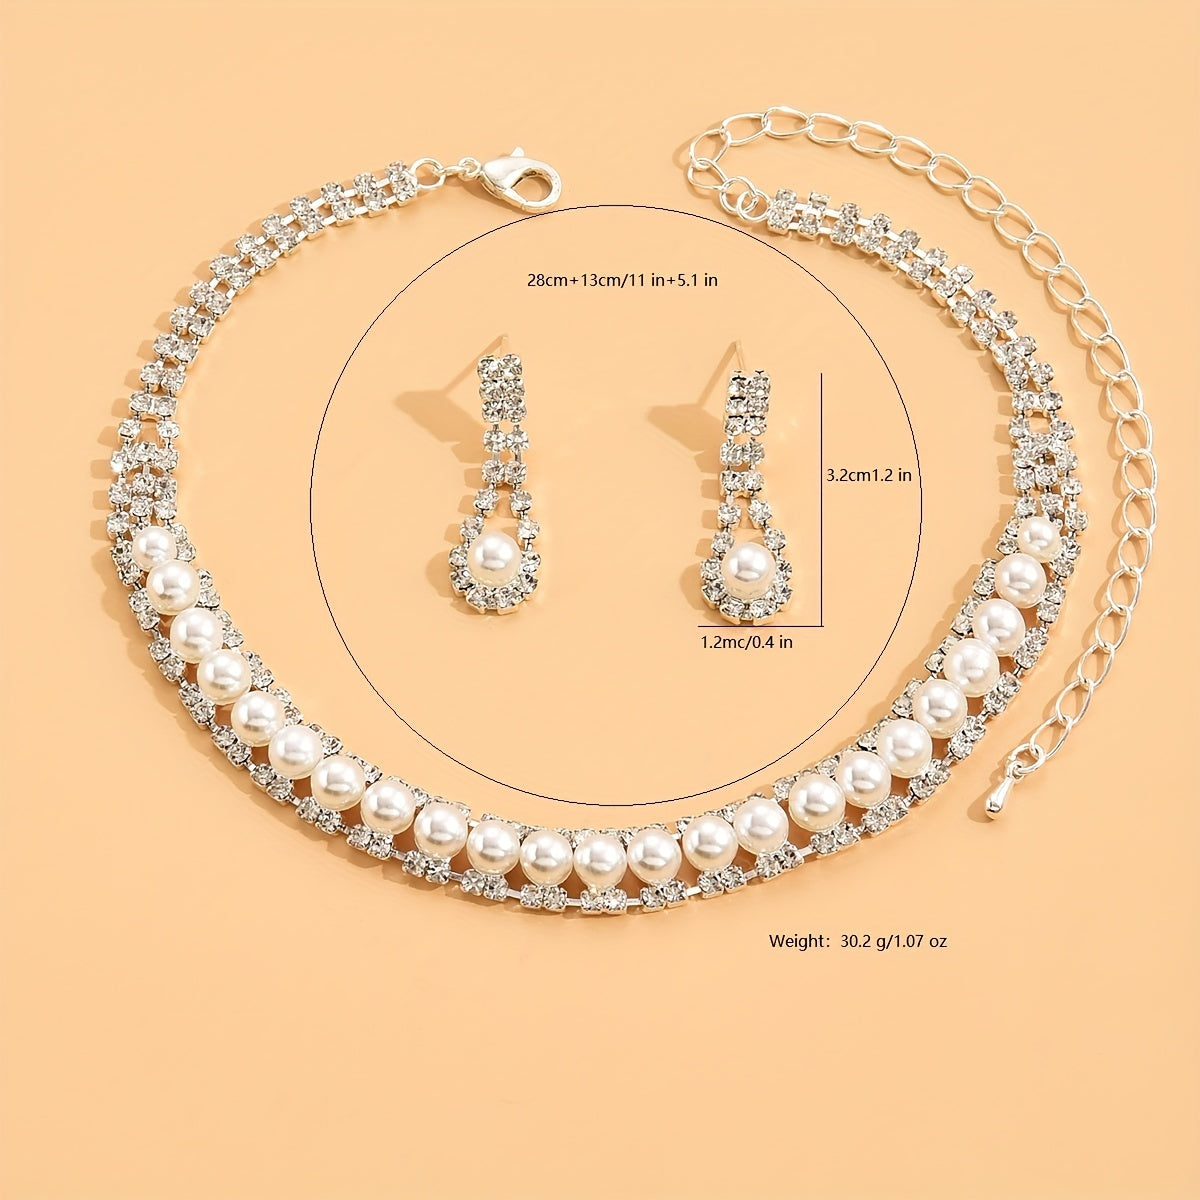 Baroque Style Faux Pearl Rhinestone Choker & Earrings Fine Jewelry Set, Silver Plated Accessories Ornament